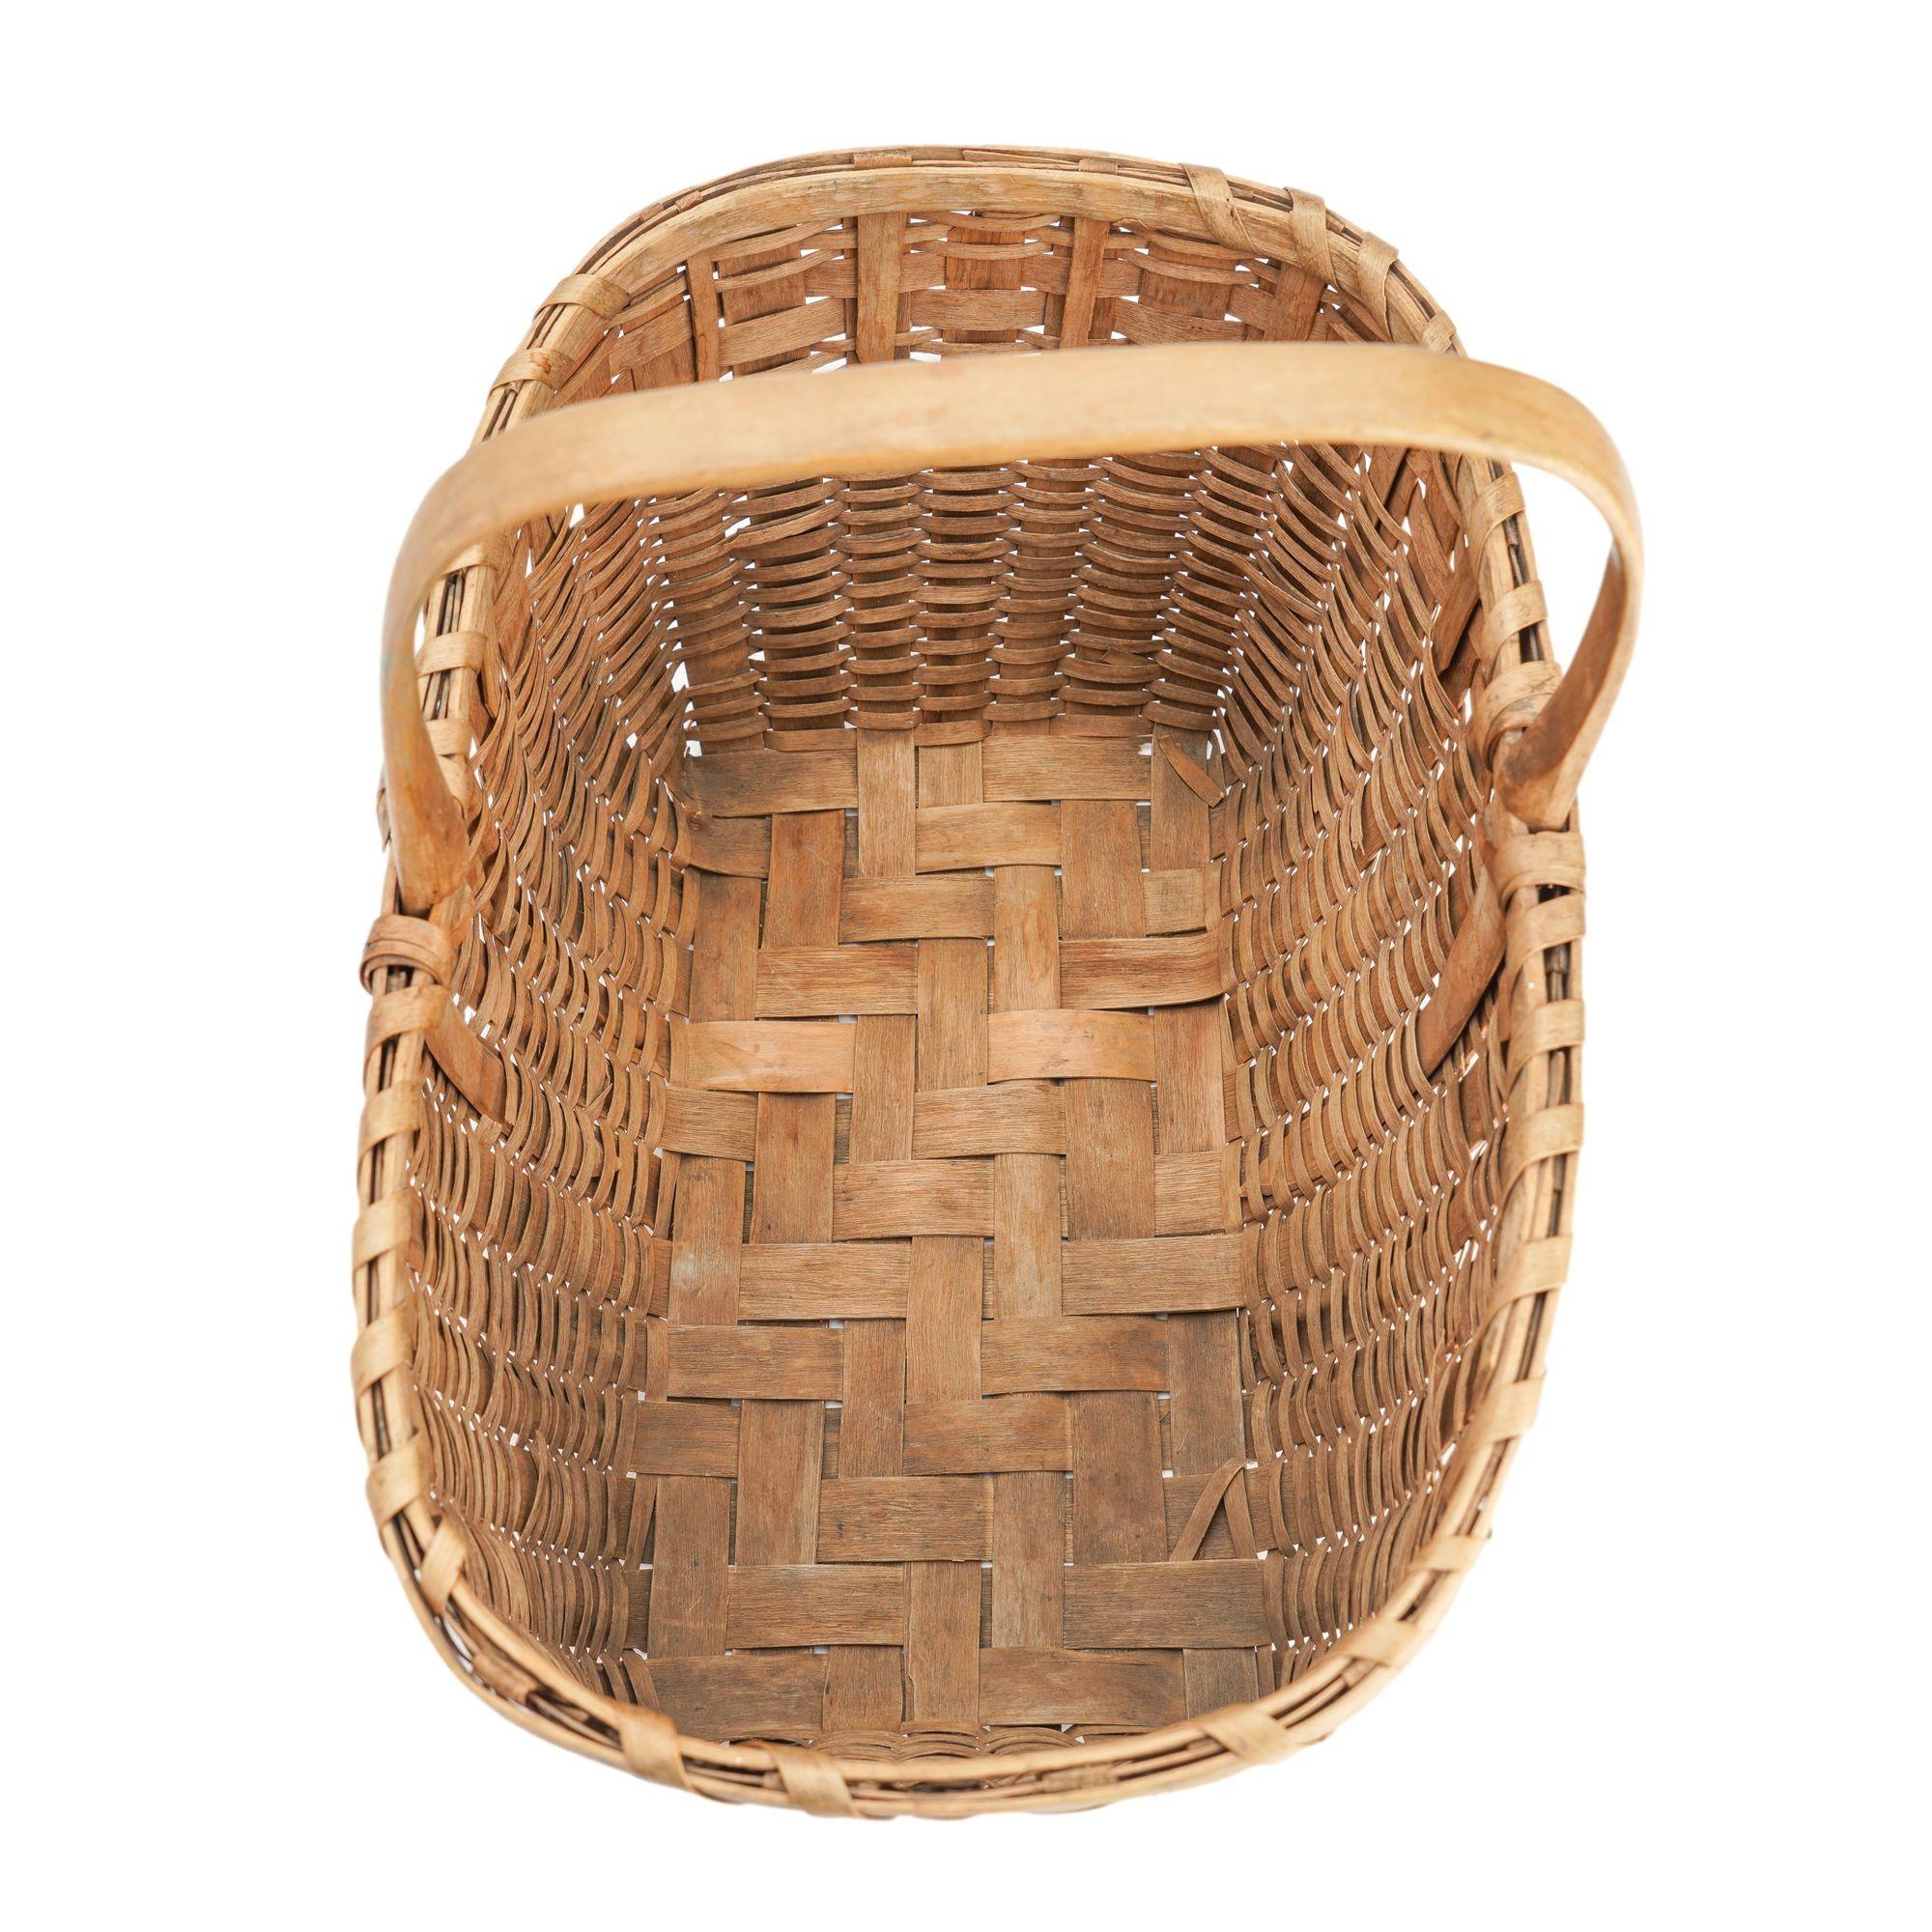 Native American ash splint market basket, c. 1900 For Sale 4